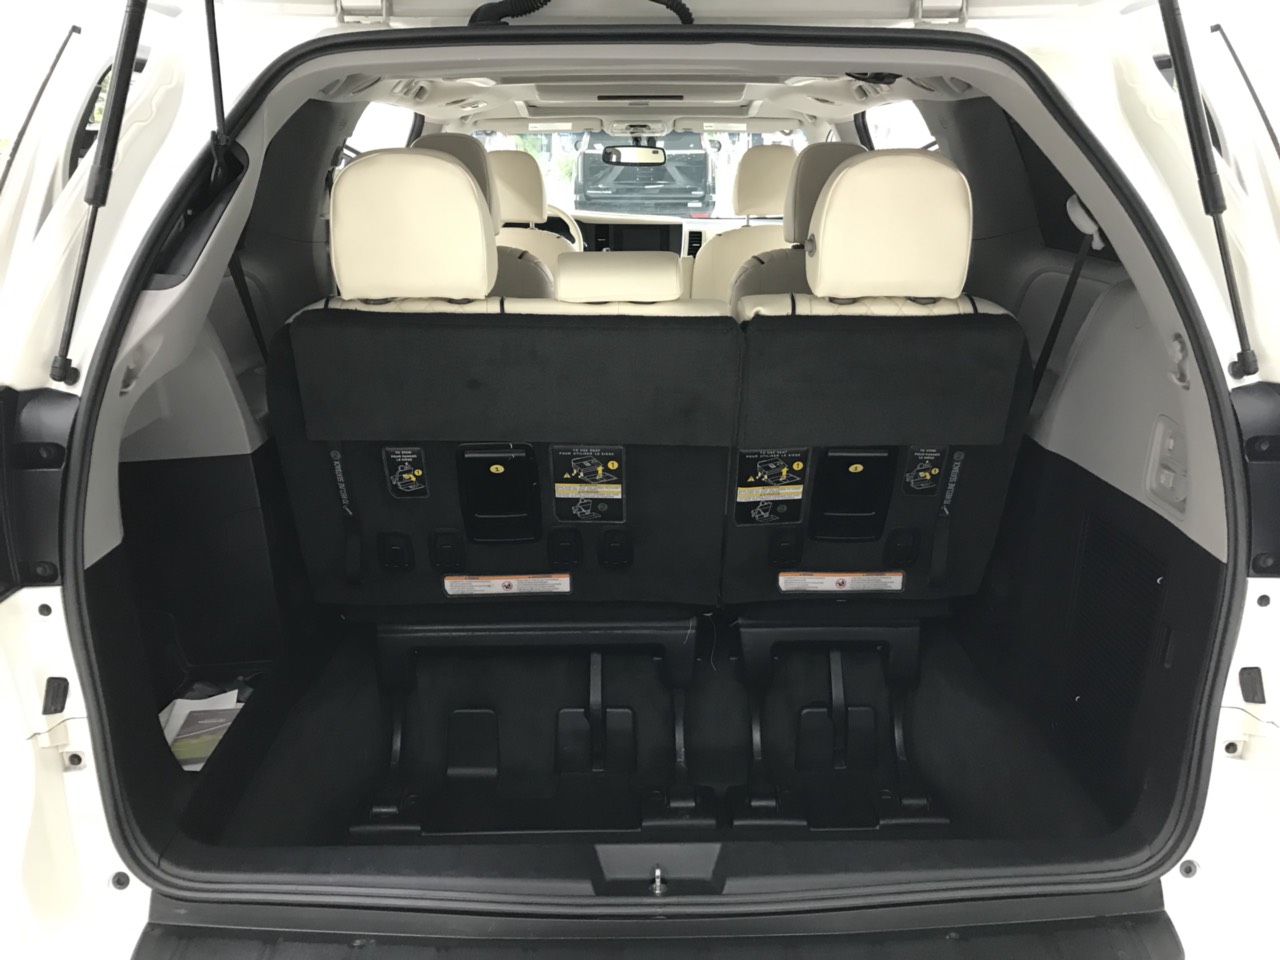 Bán chiếc Toyota Sienna Limited 3.5V6 sản xuất 2015 xuất Mỹ